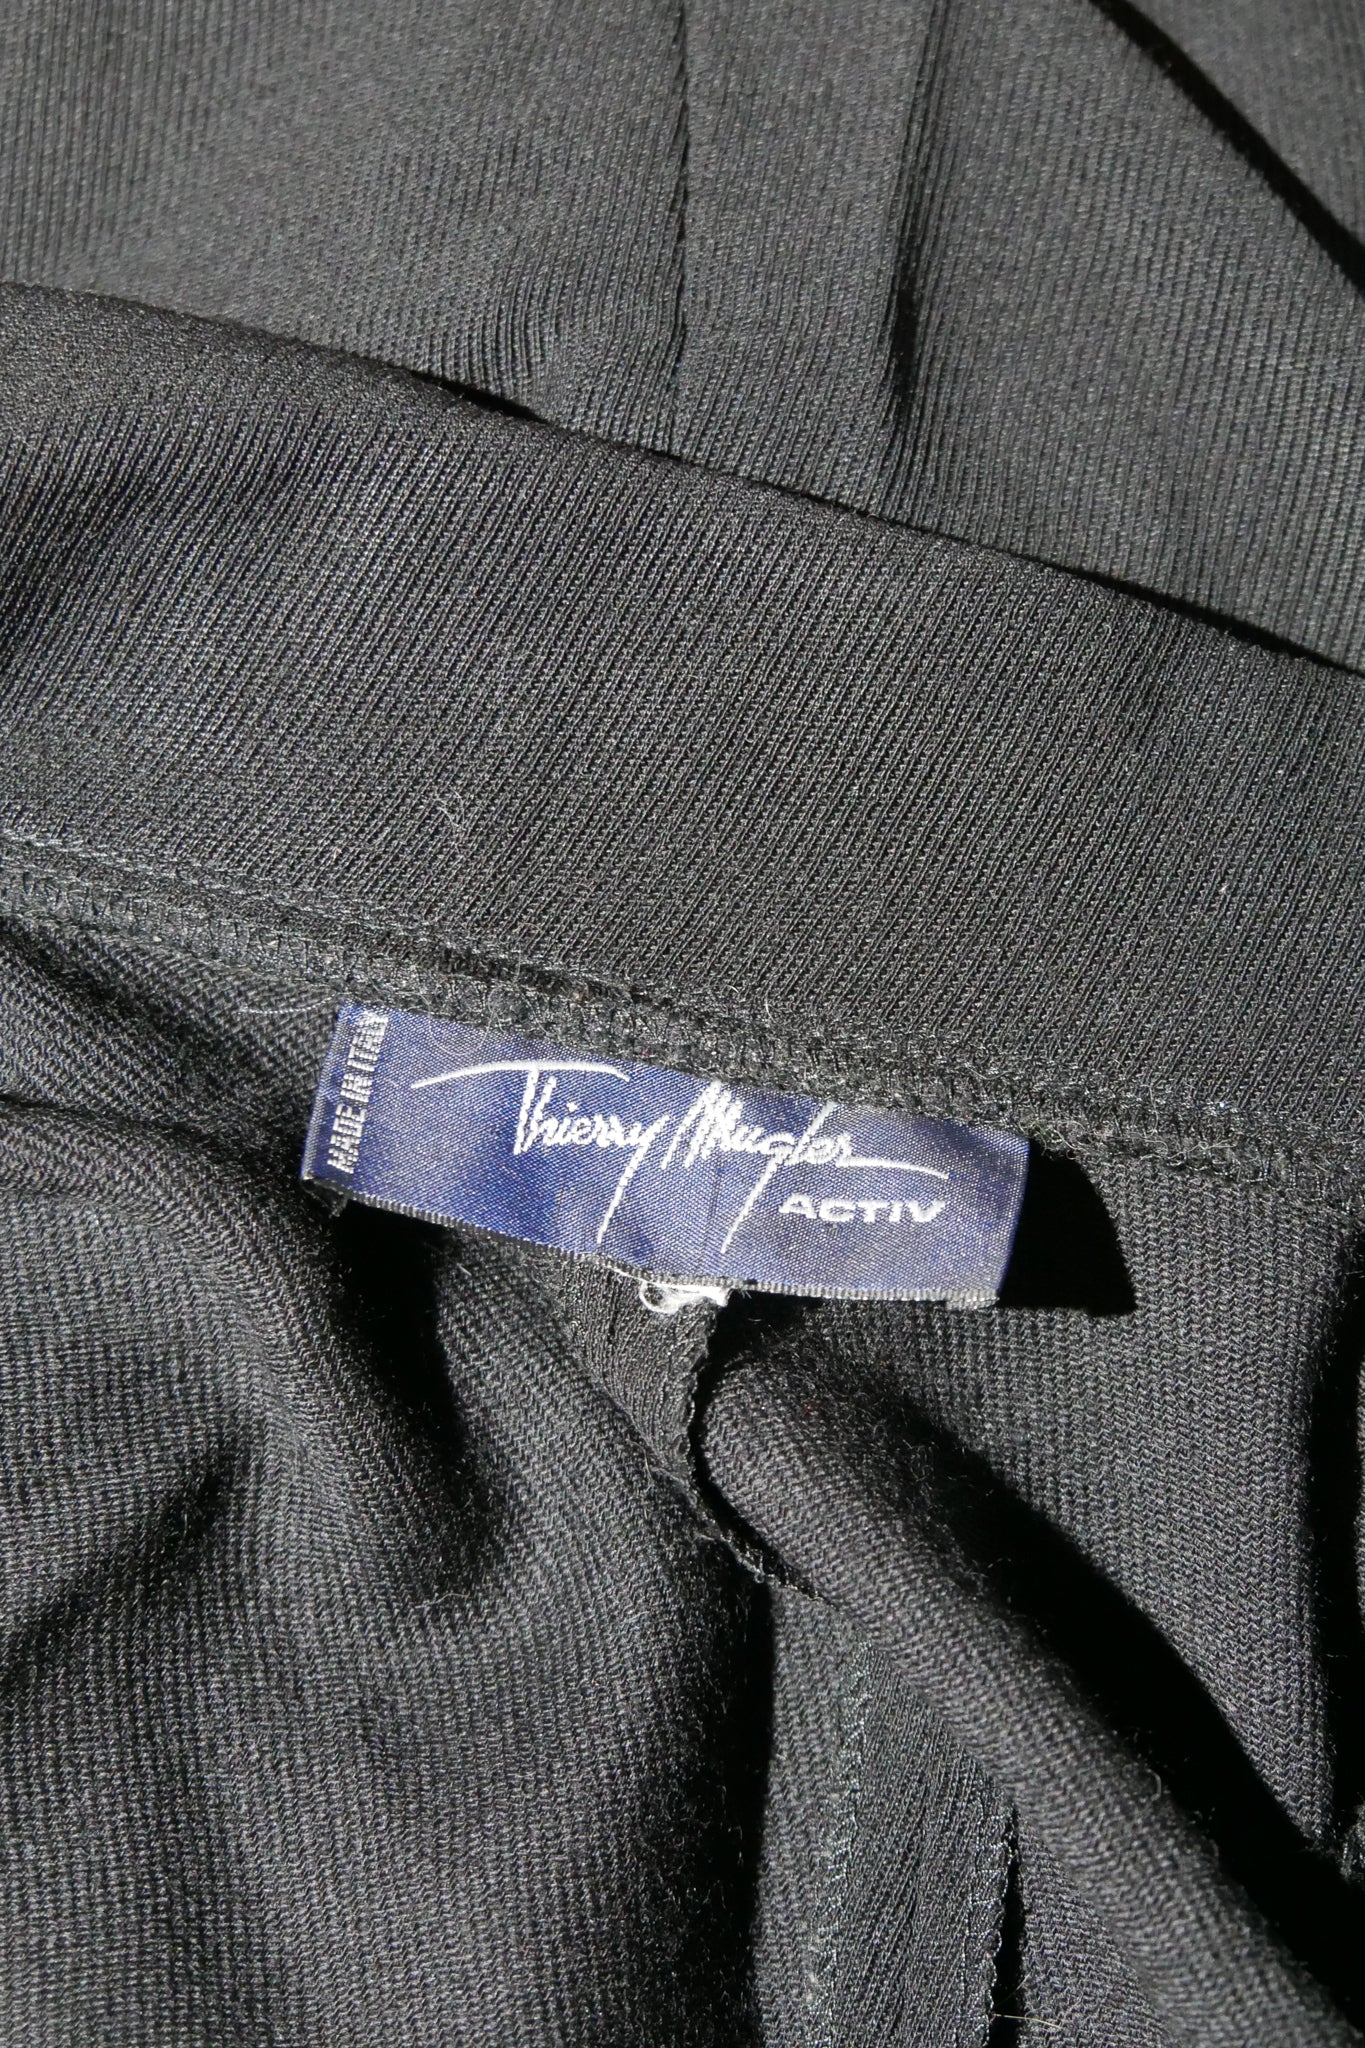 Thierry Mugler - Thierry Mugler Activ - Long Black Dress w/ Silver Details